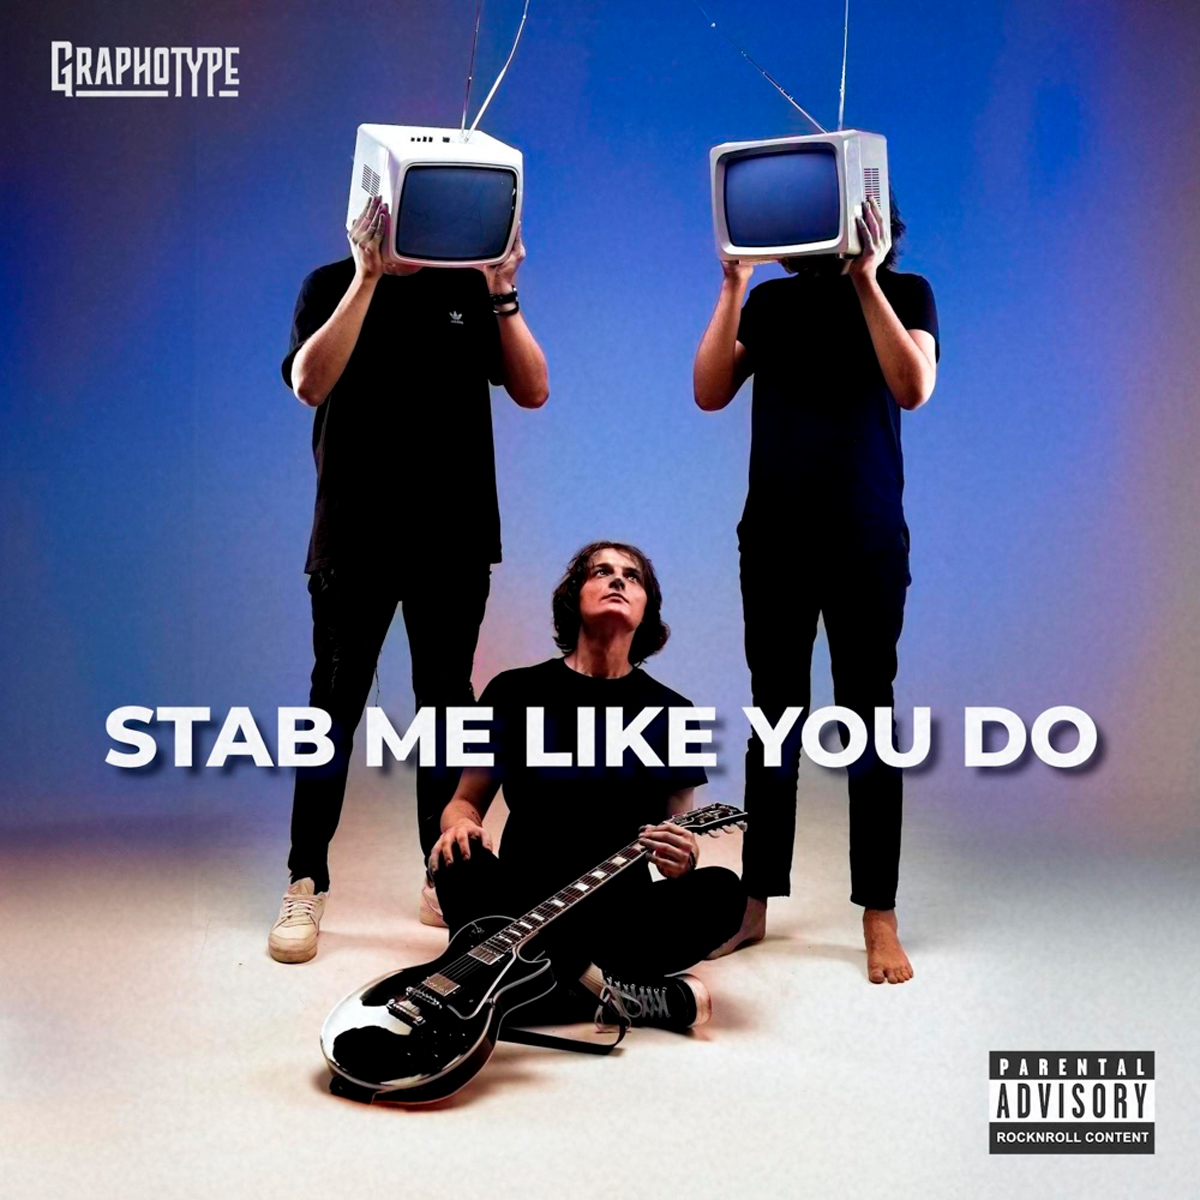 GRAPHOTYPE / “Stab Me Like You Do”